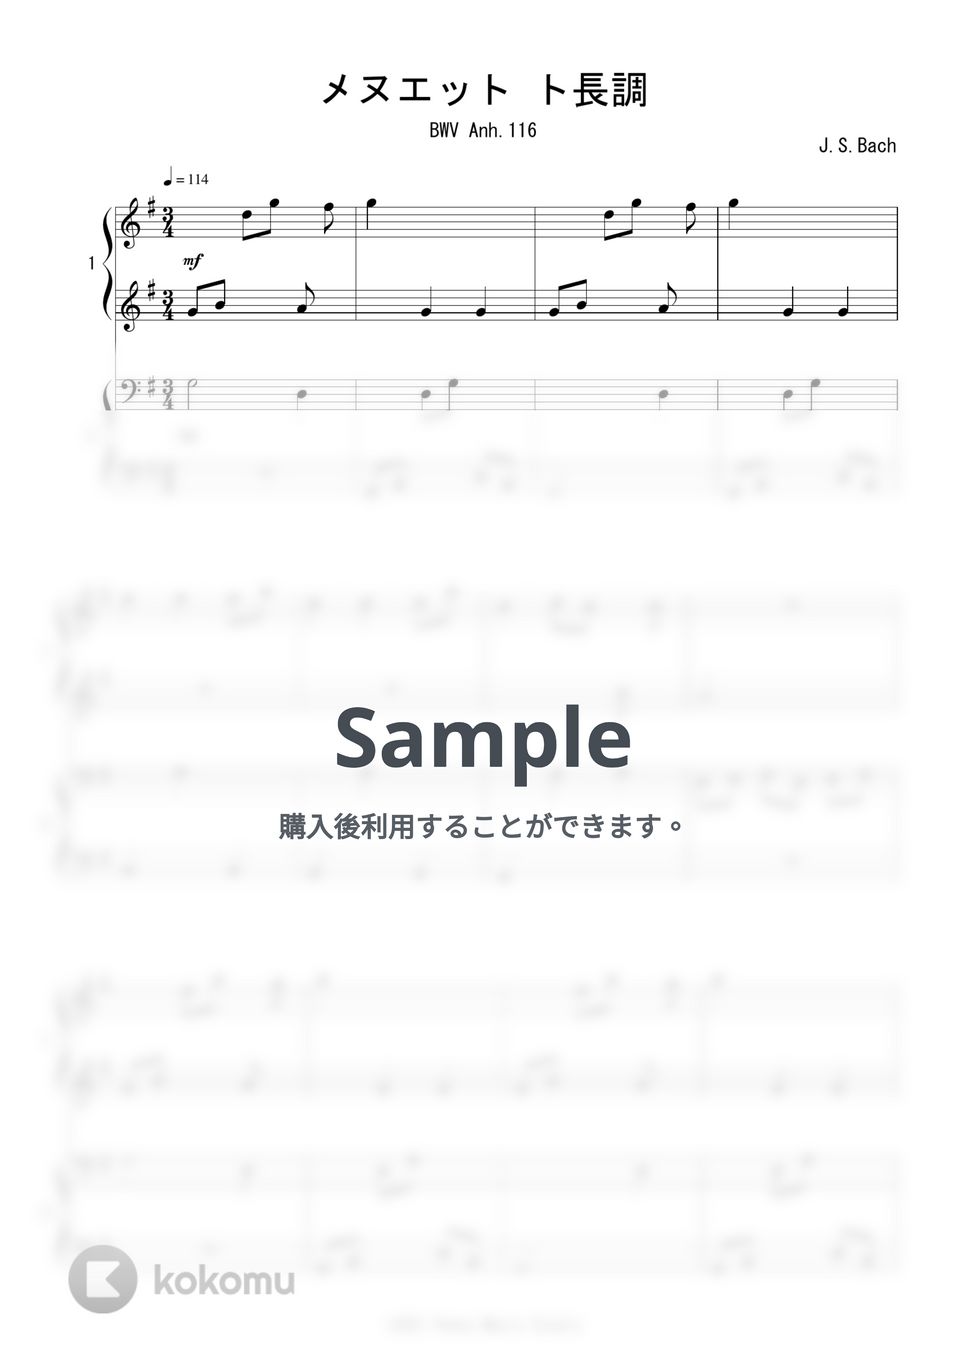 J.S.バッハ - メヌエット ト長調  BWV Anh.116 (ピアノ連弾) by Peony